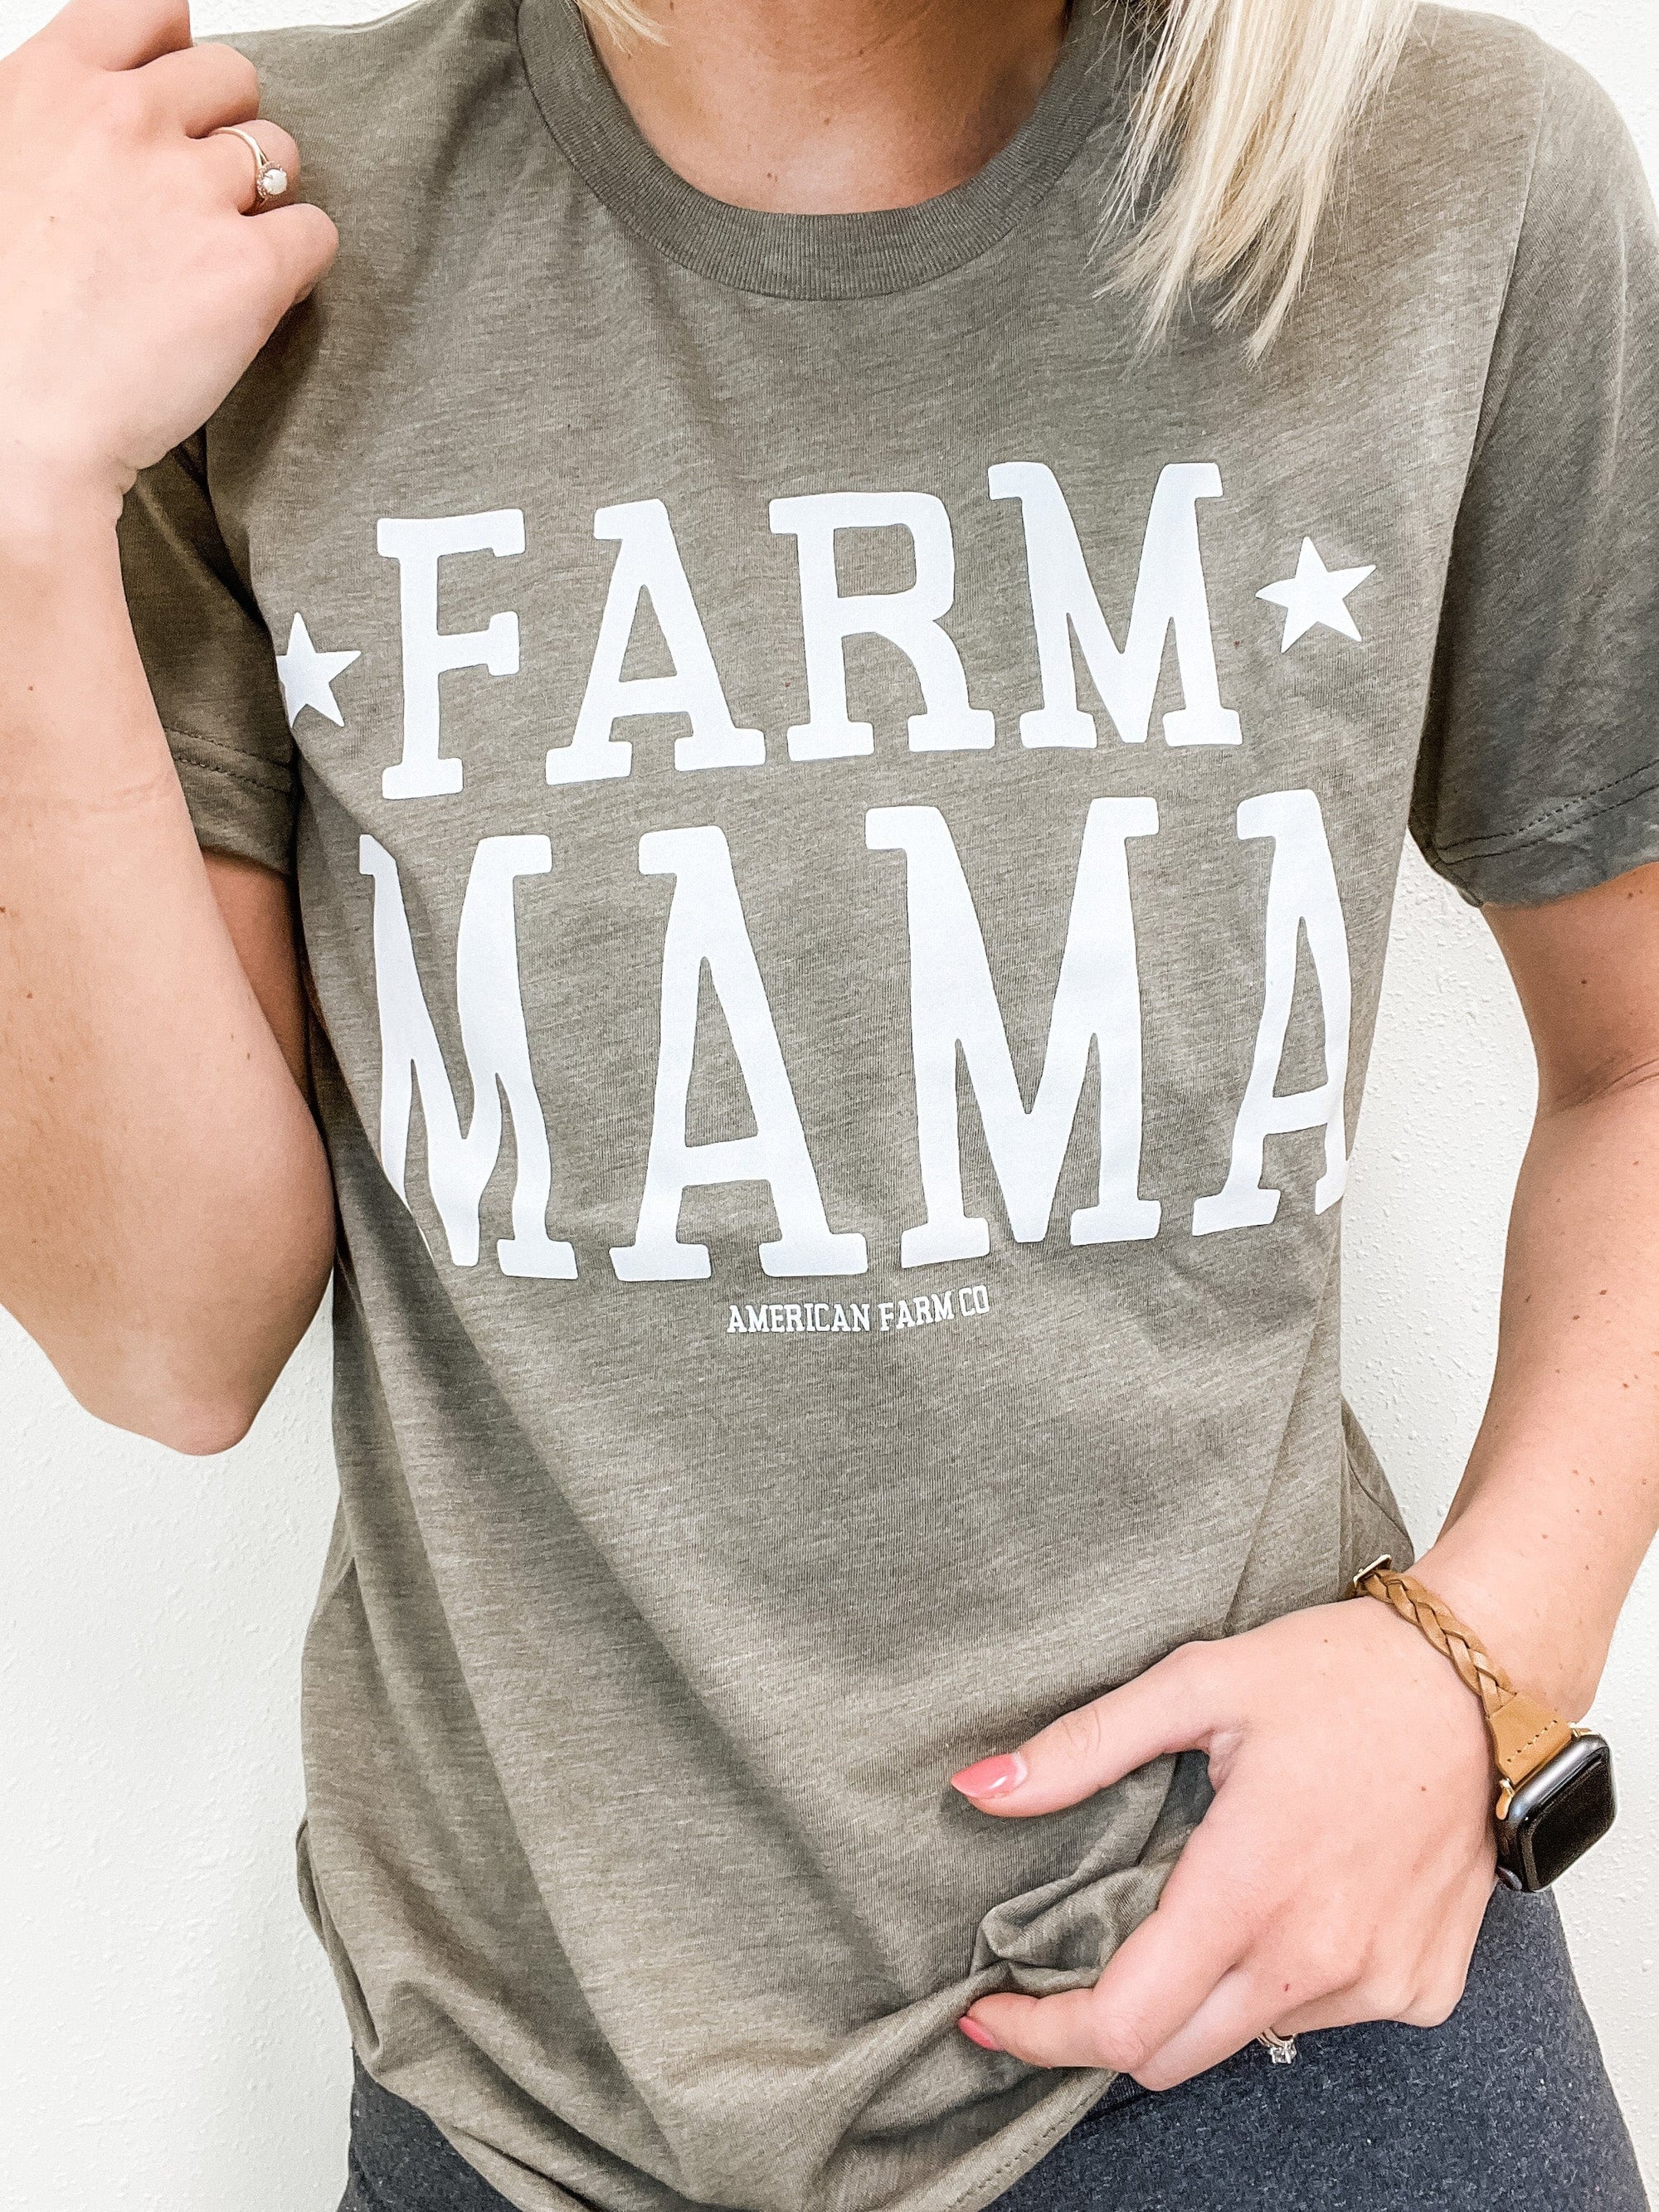 American Farm Company Shirts 'Farm Mama' Tee